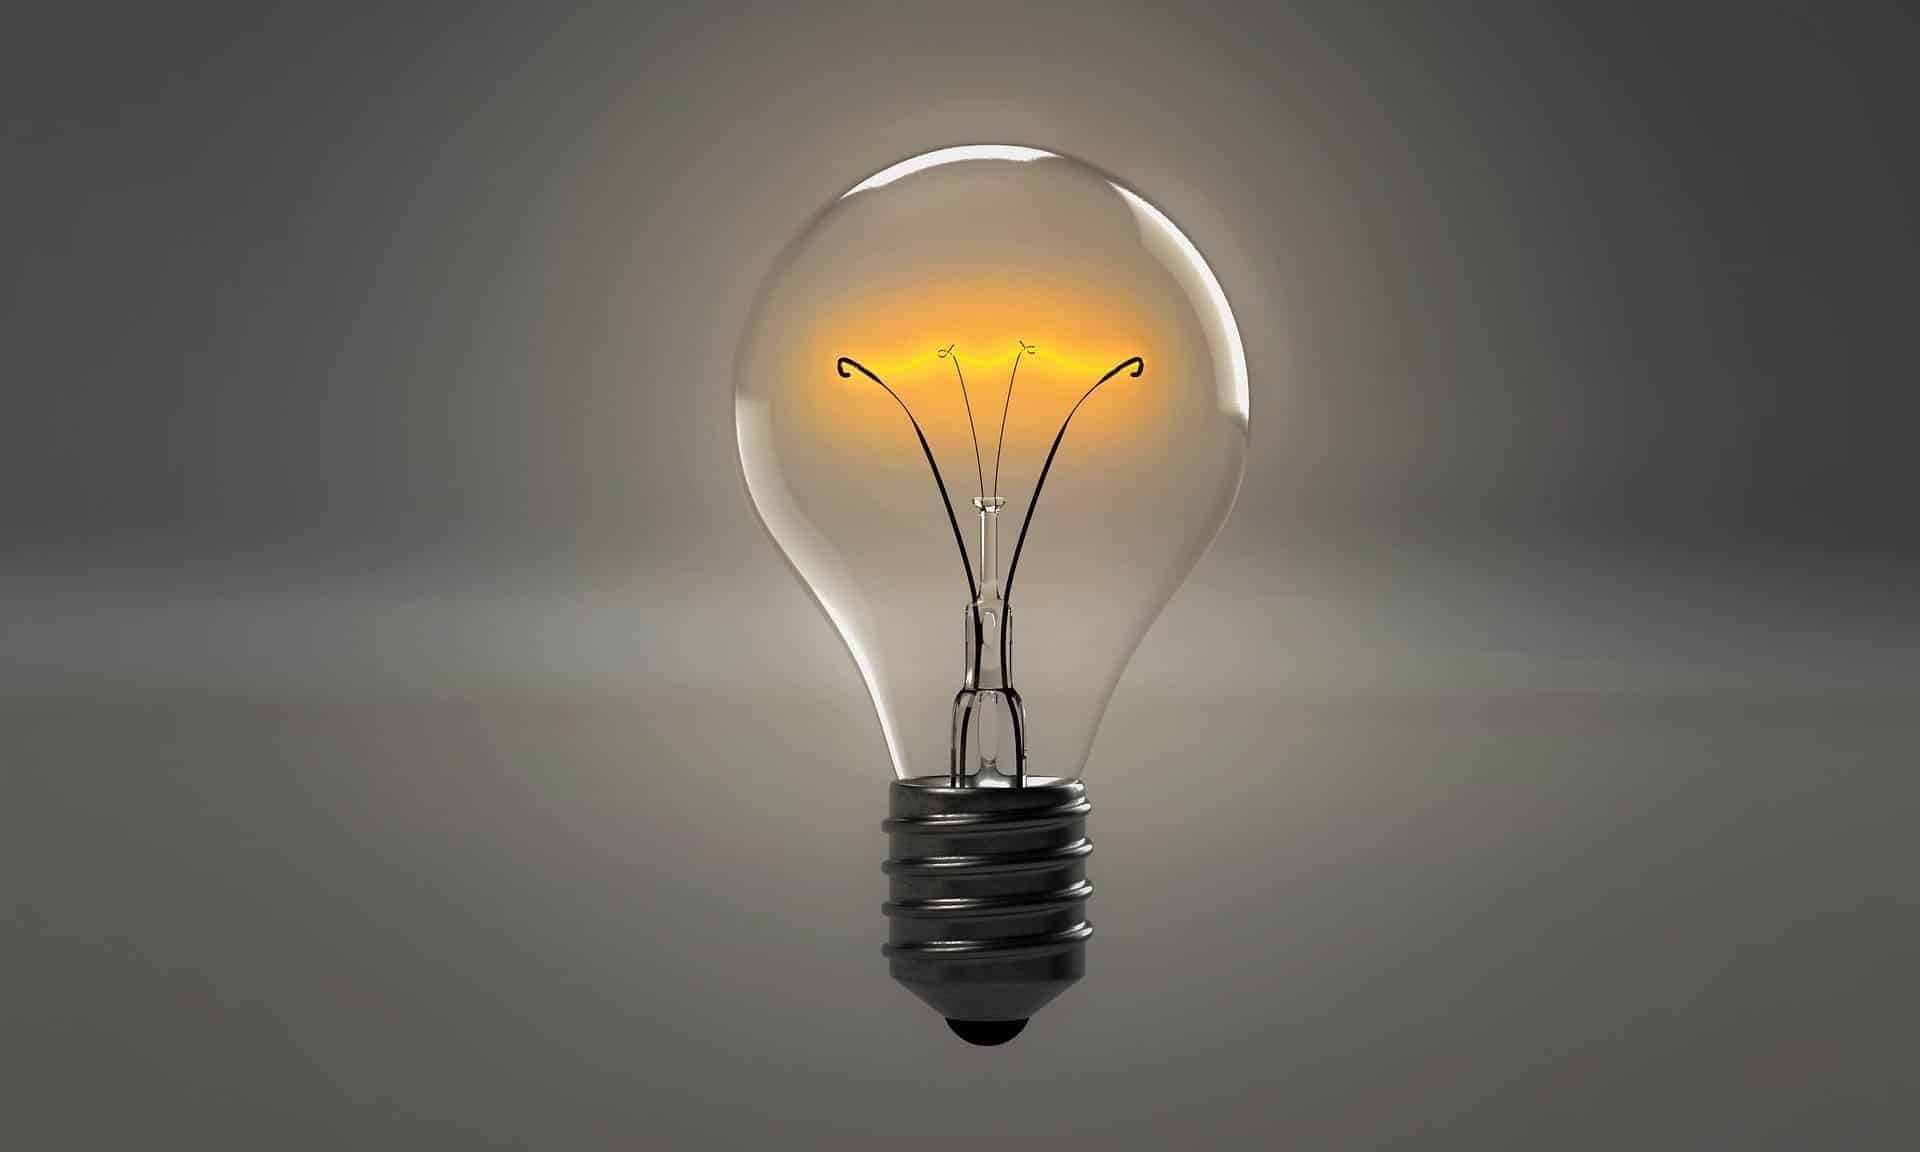 lampada representando uma ideia